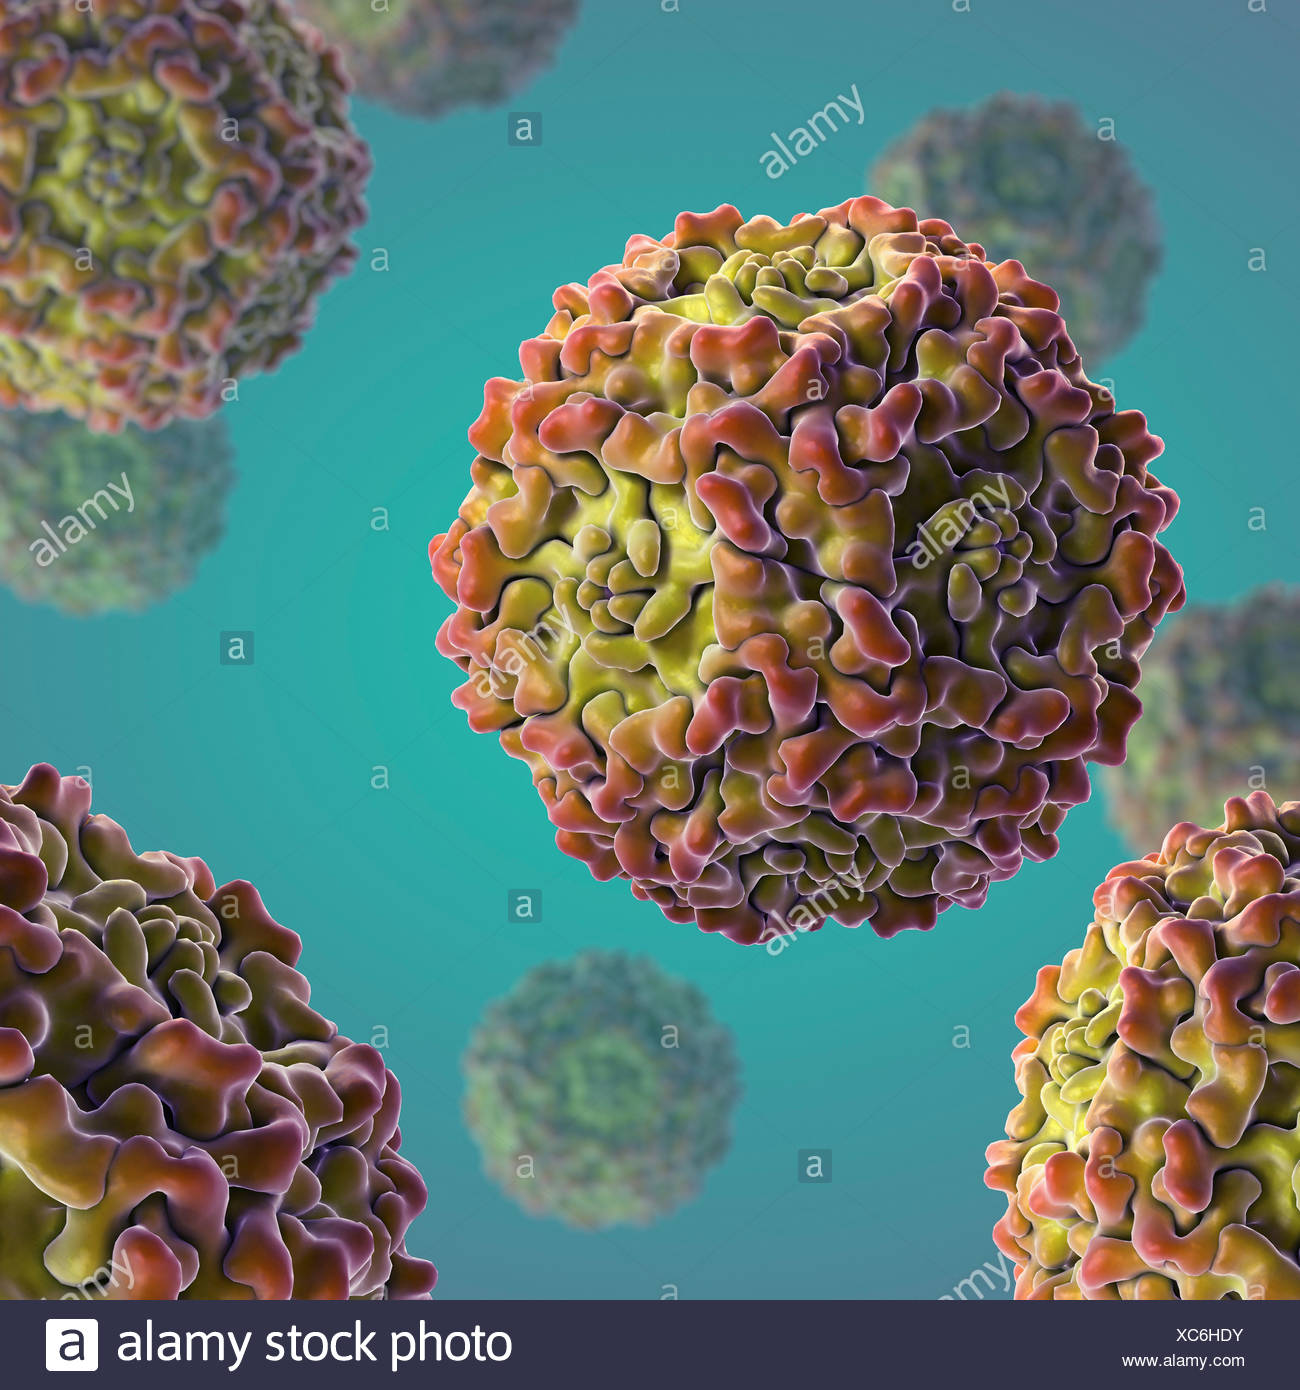 parvovirus-b19-virus-high-resolution-stock-photography-and-images-alamy